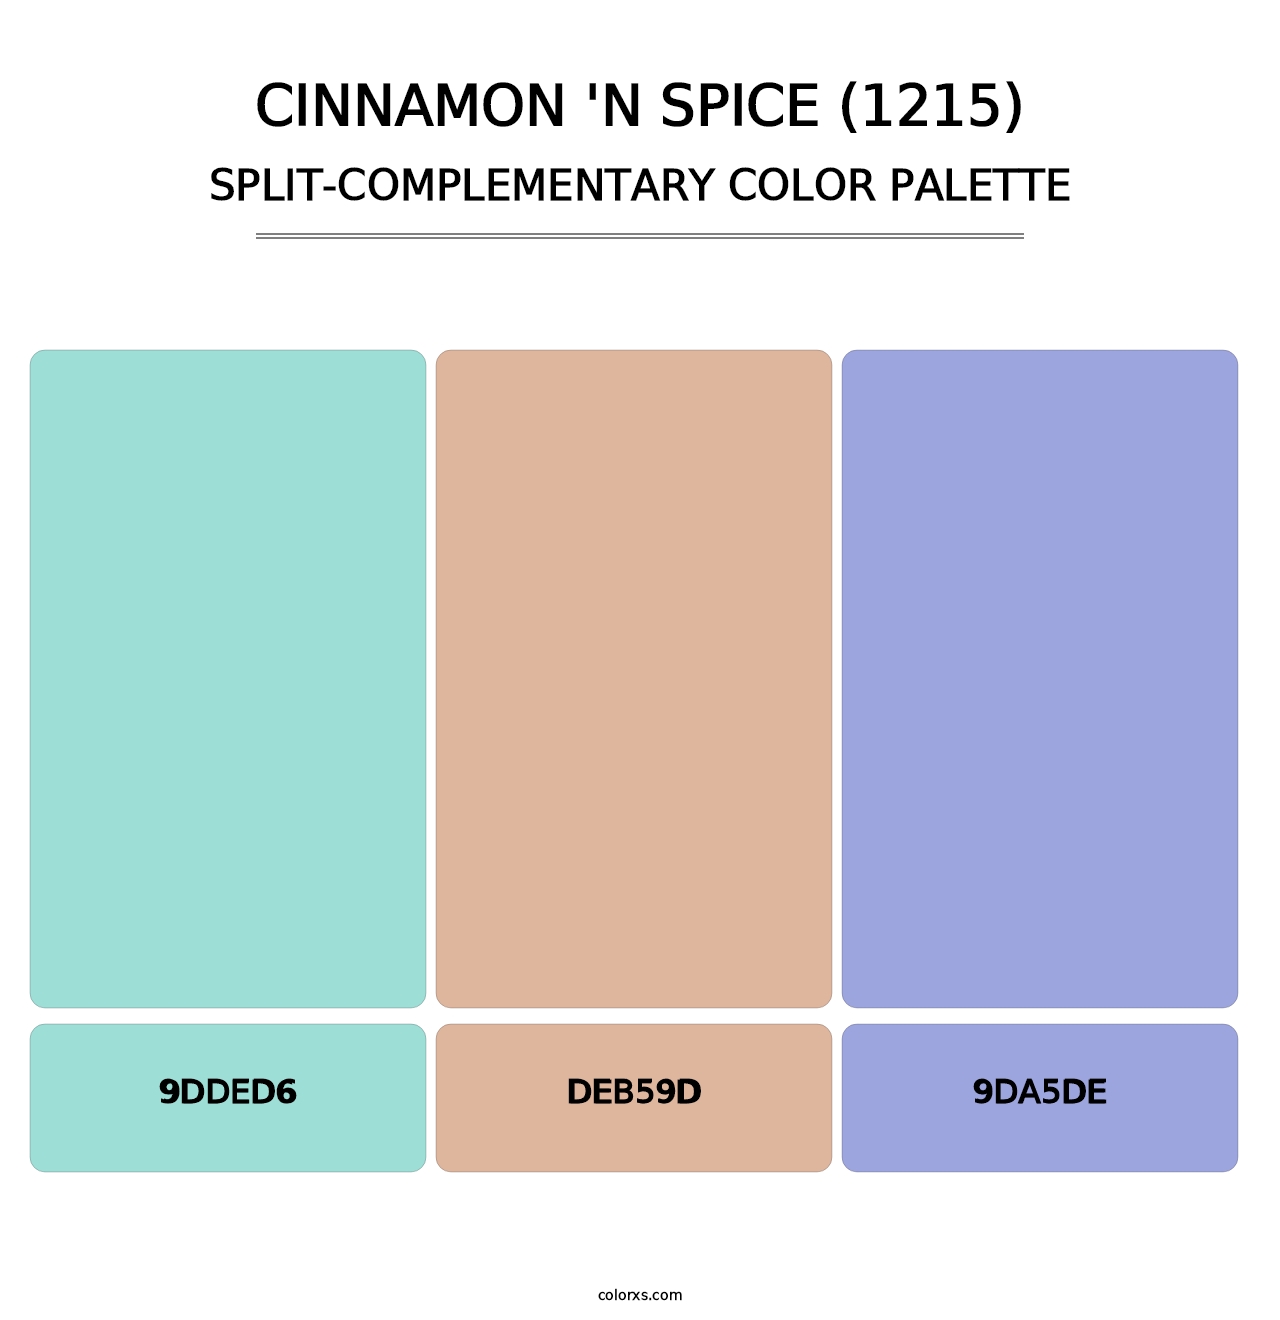 Cinnamon 'n Spice (1215) - Split-Complementary Color Palette